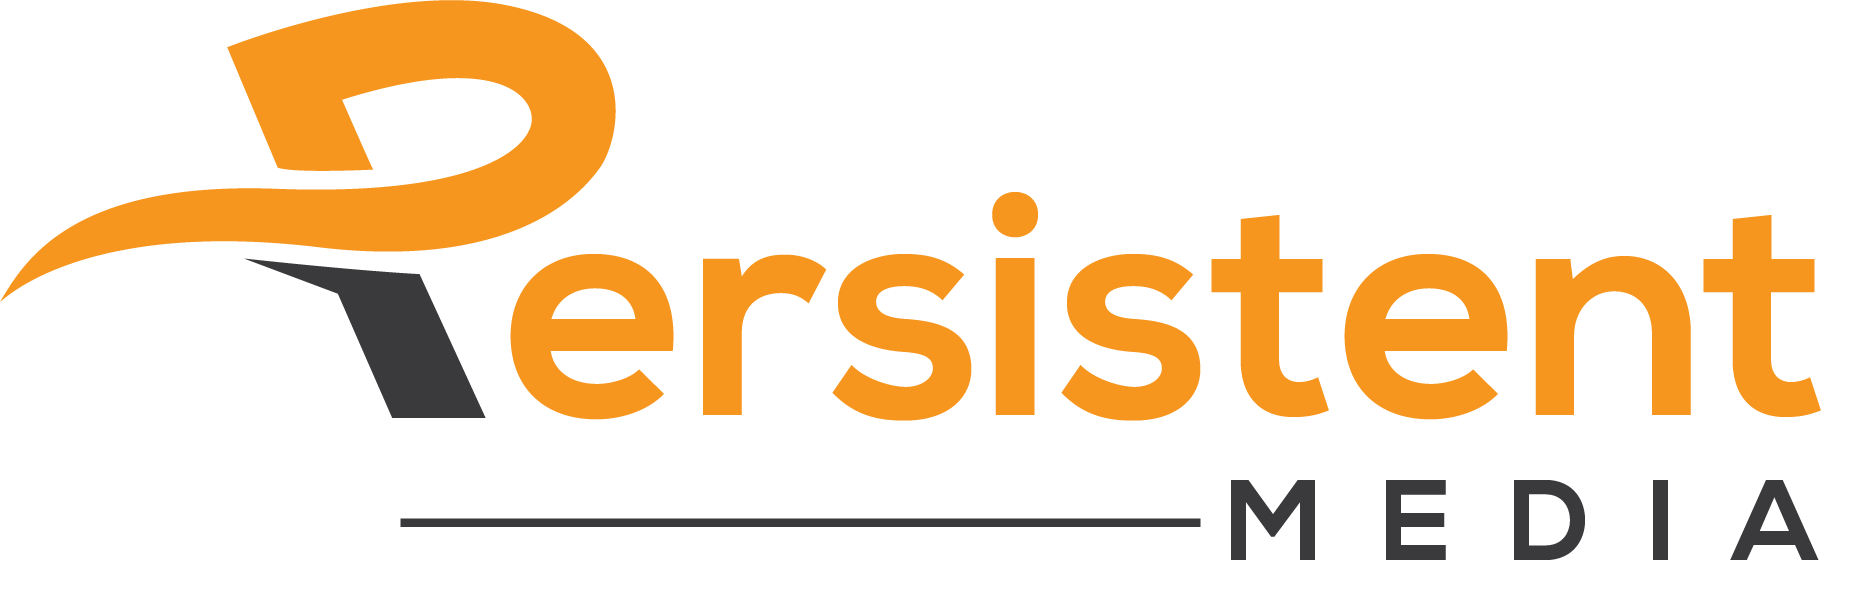 Persistent Logo - Logo and Graphic Design - Persistent Media